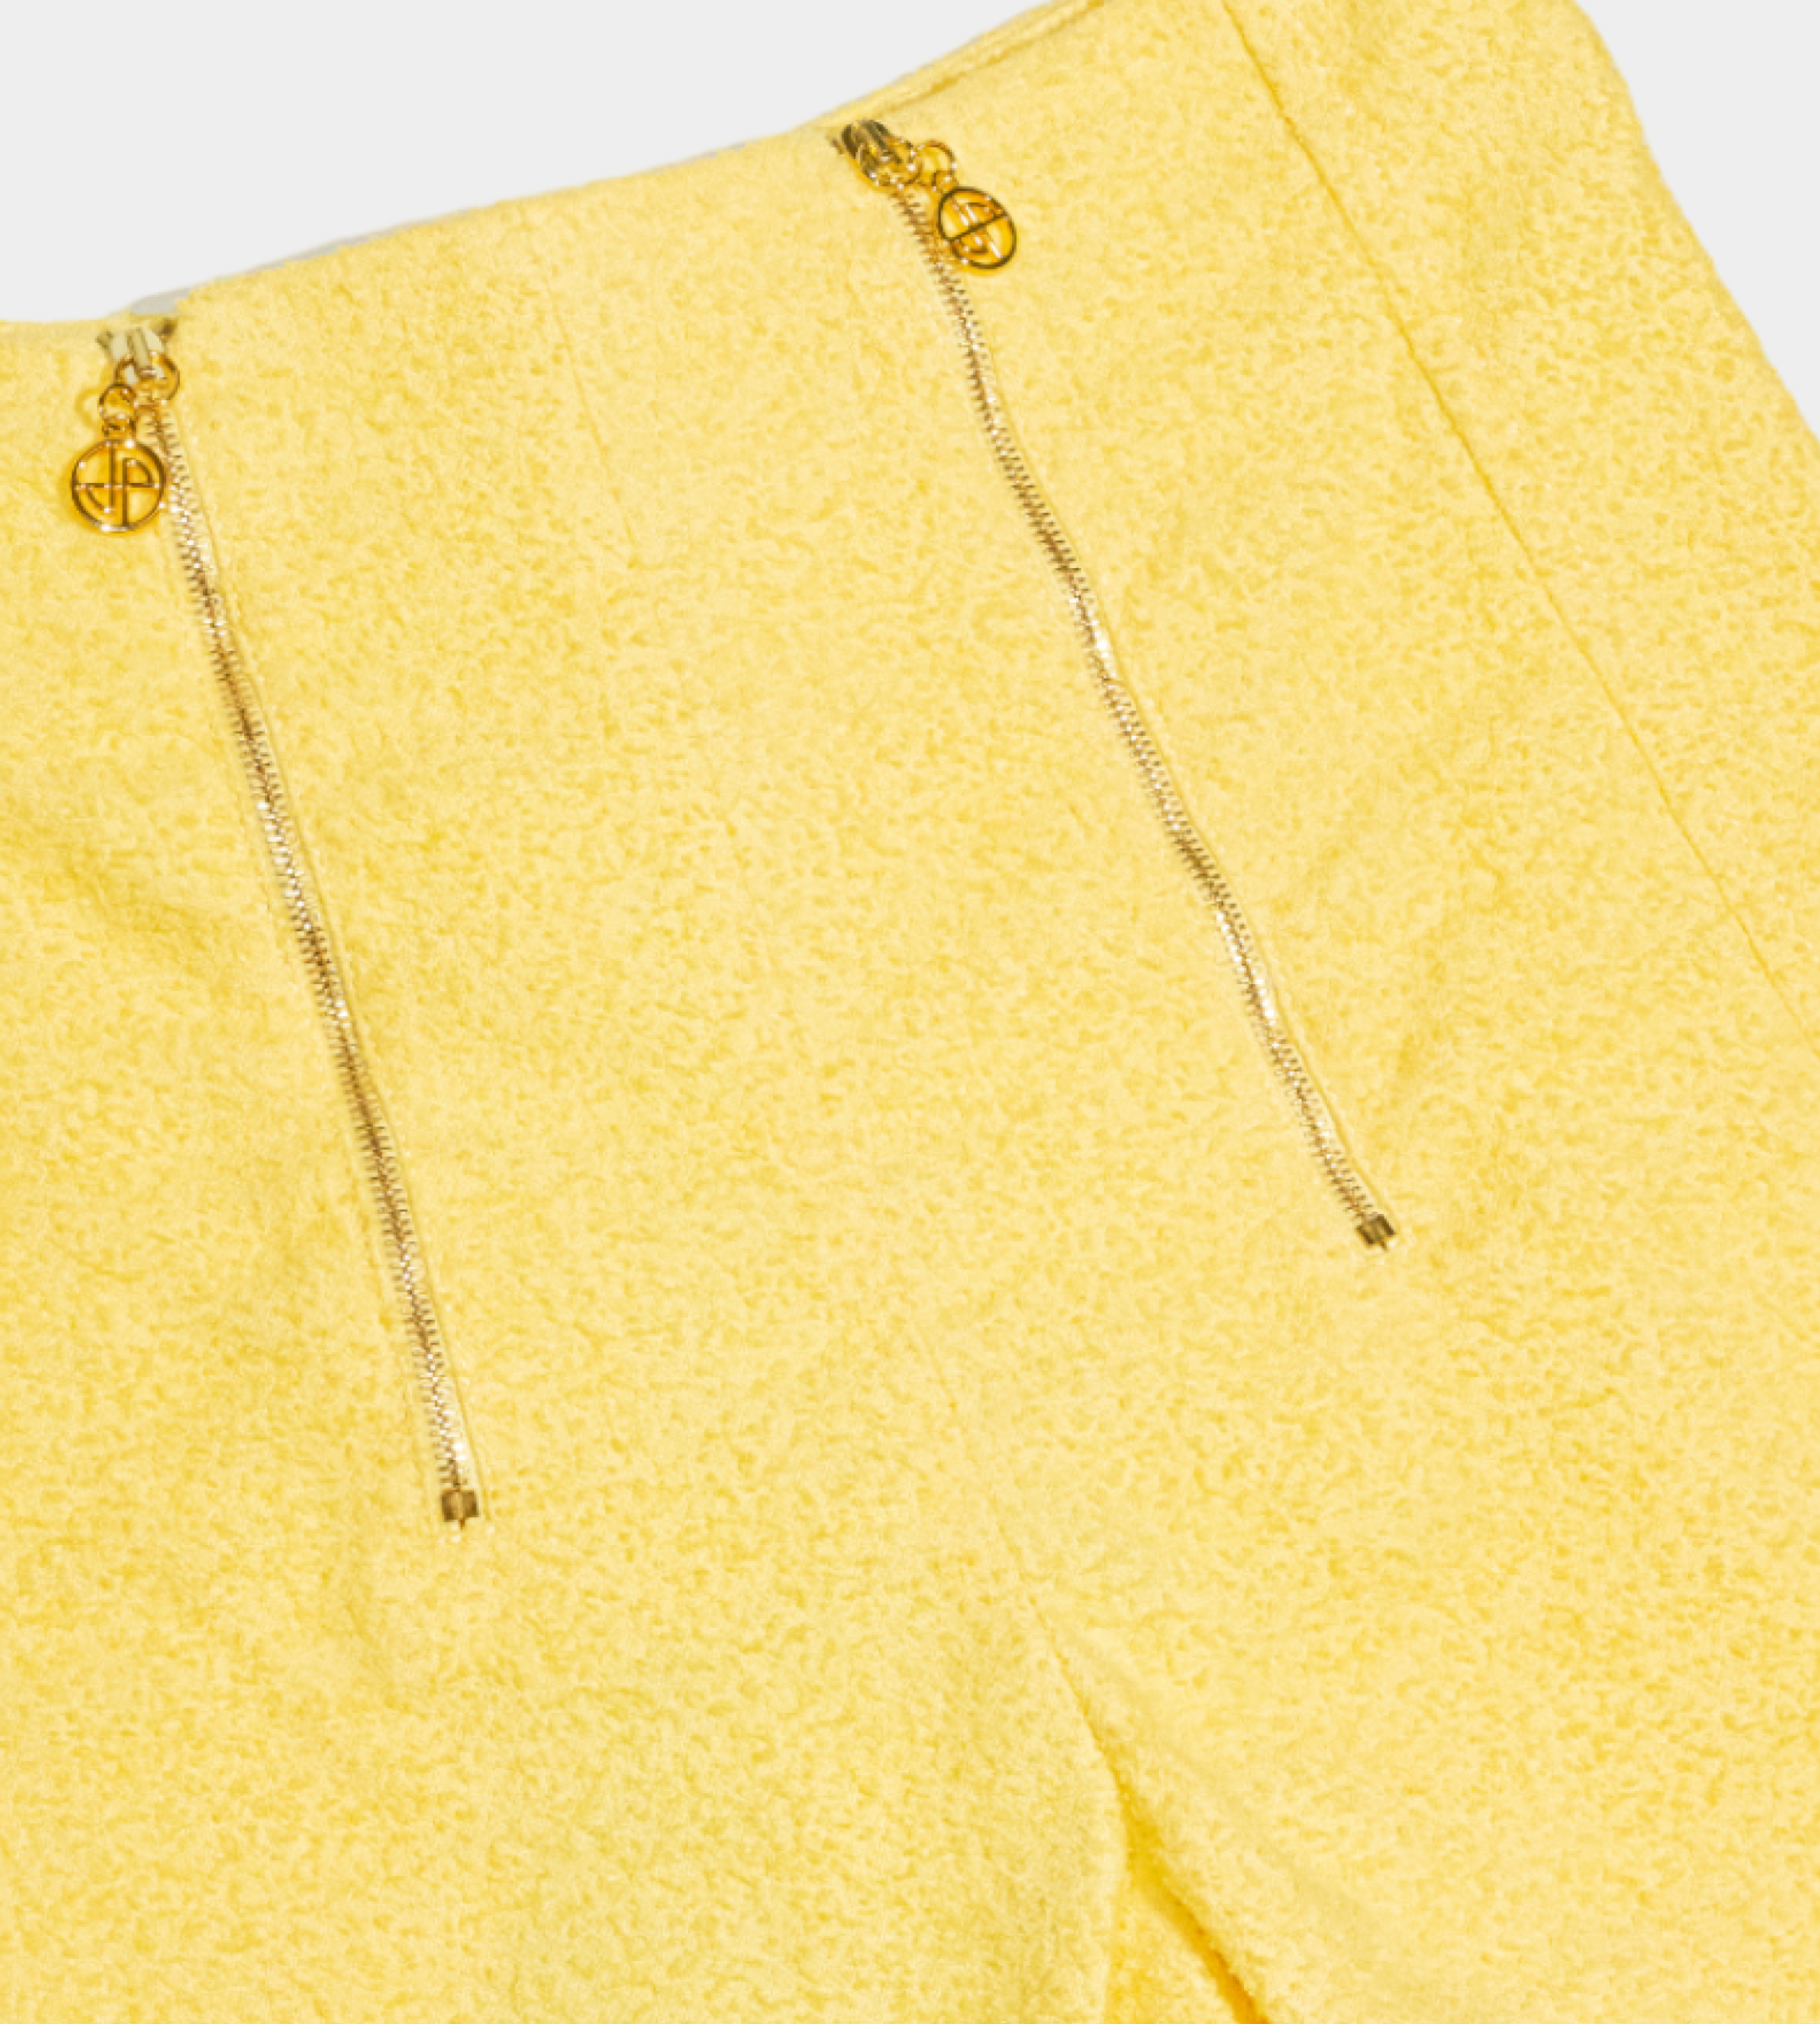 Patou - Zipper Mini Shorts Mimosa